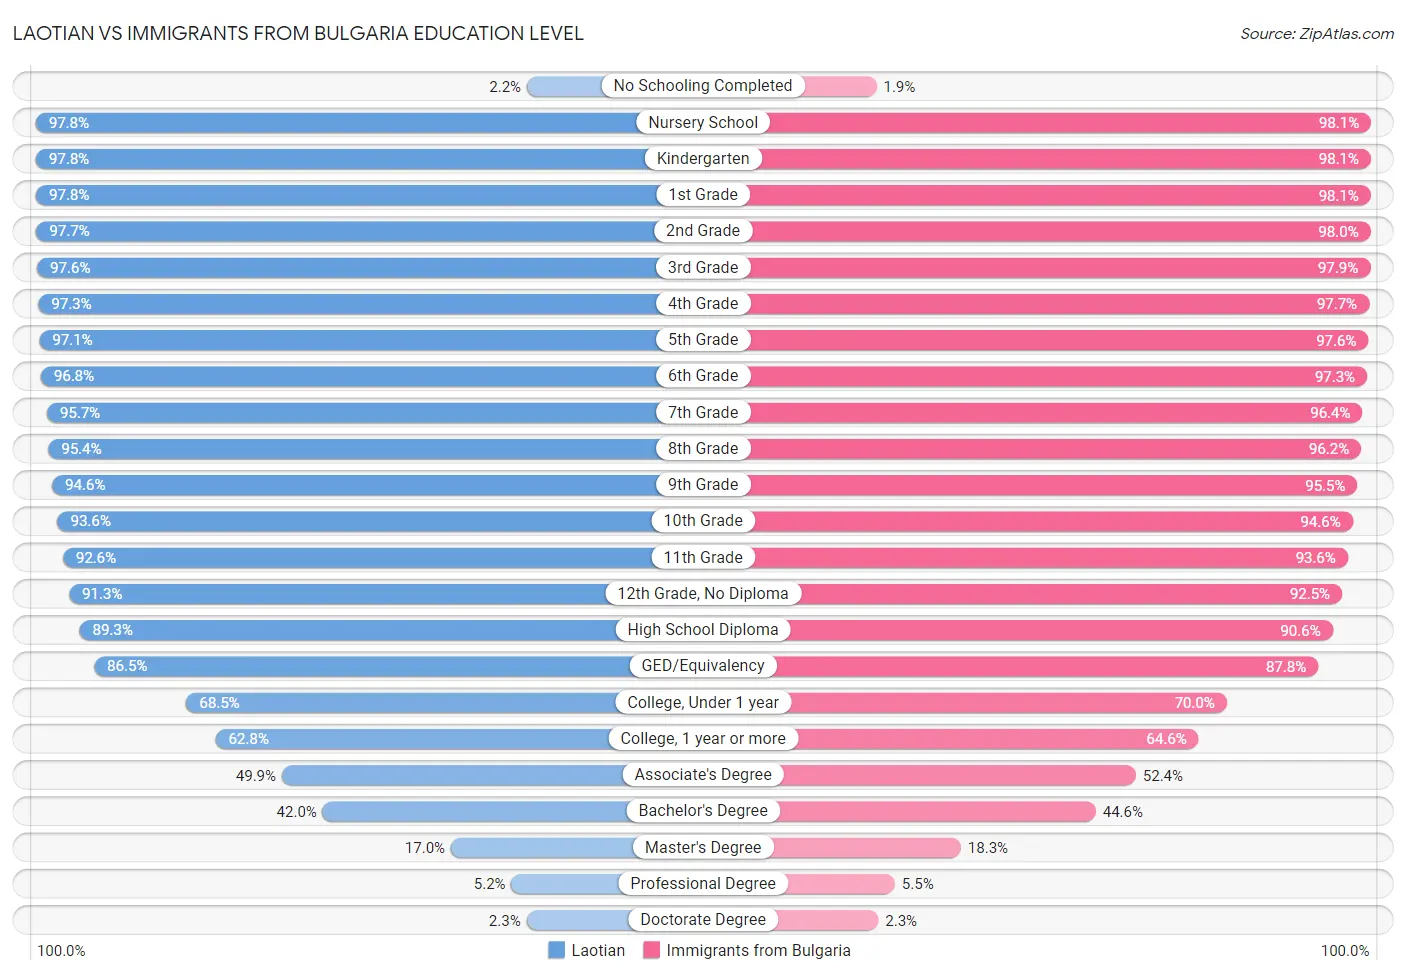 Laotian vs Immigrants from Bulgaria Education Level